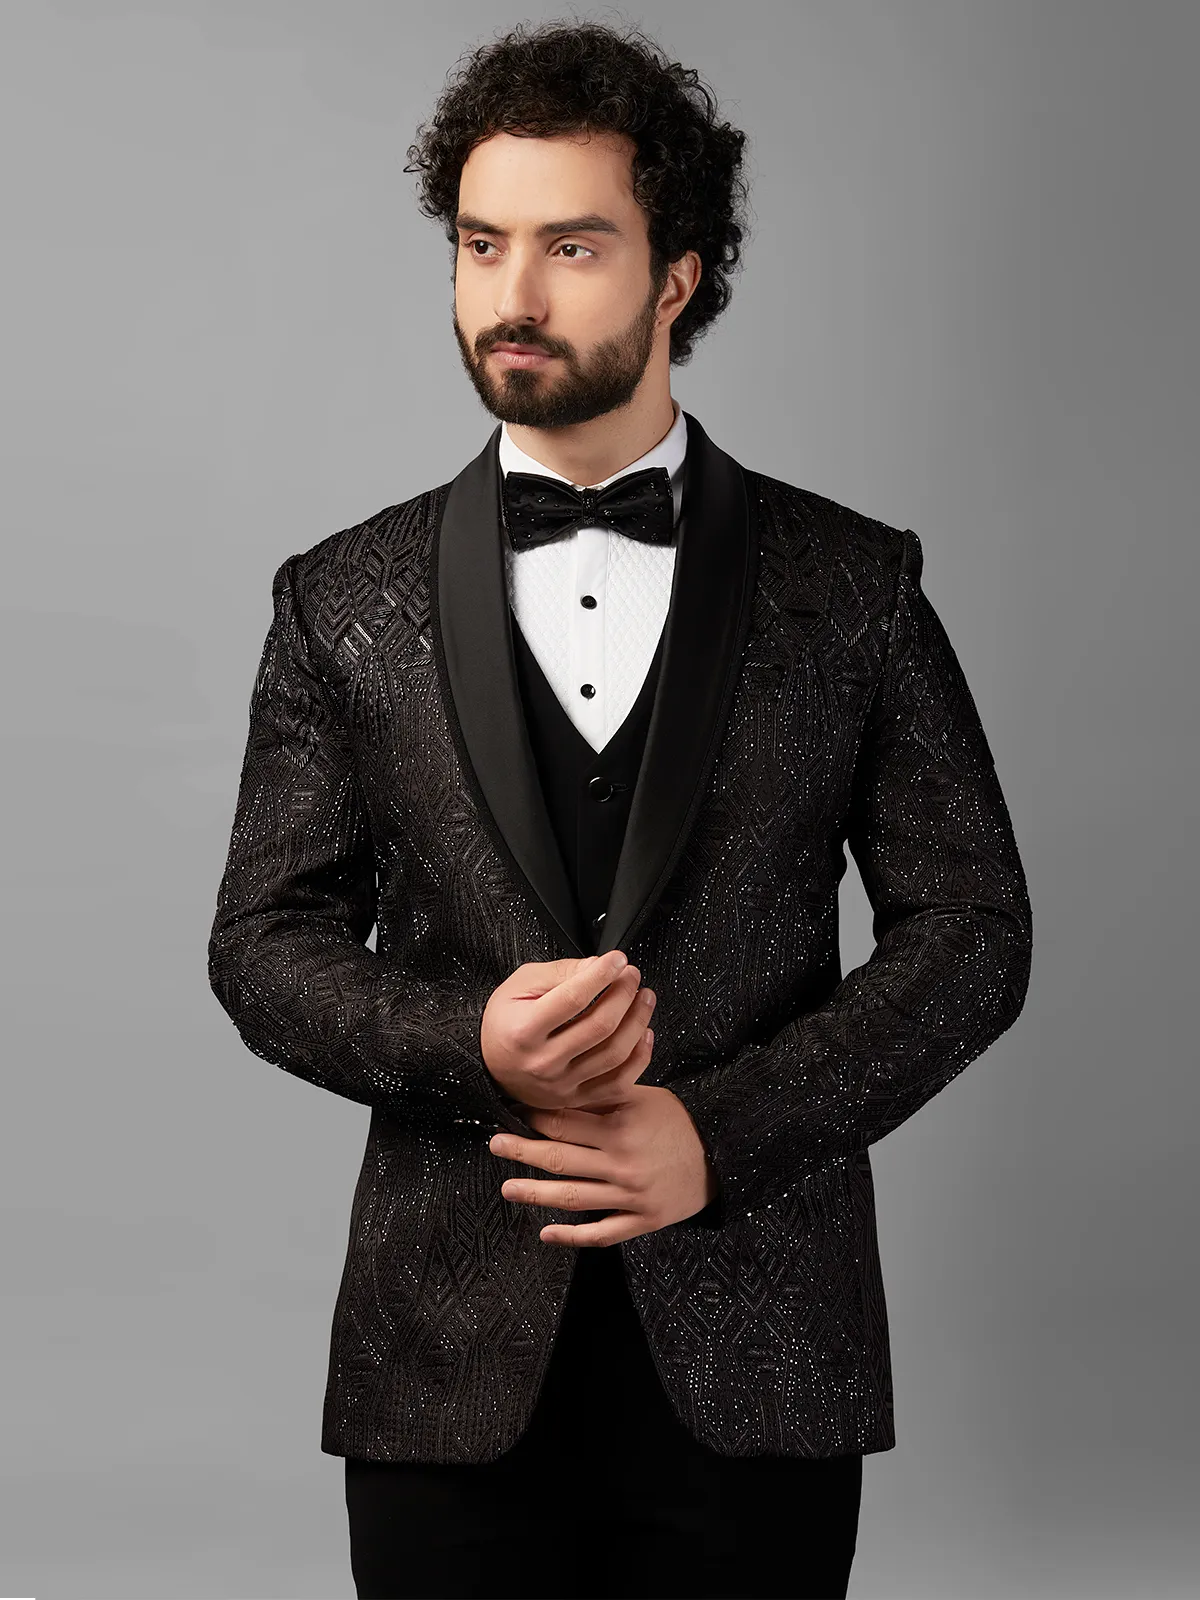 Classy black embellished coat suit